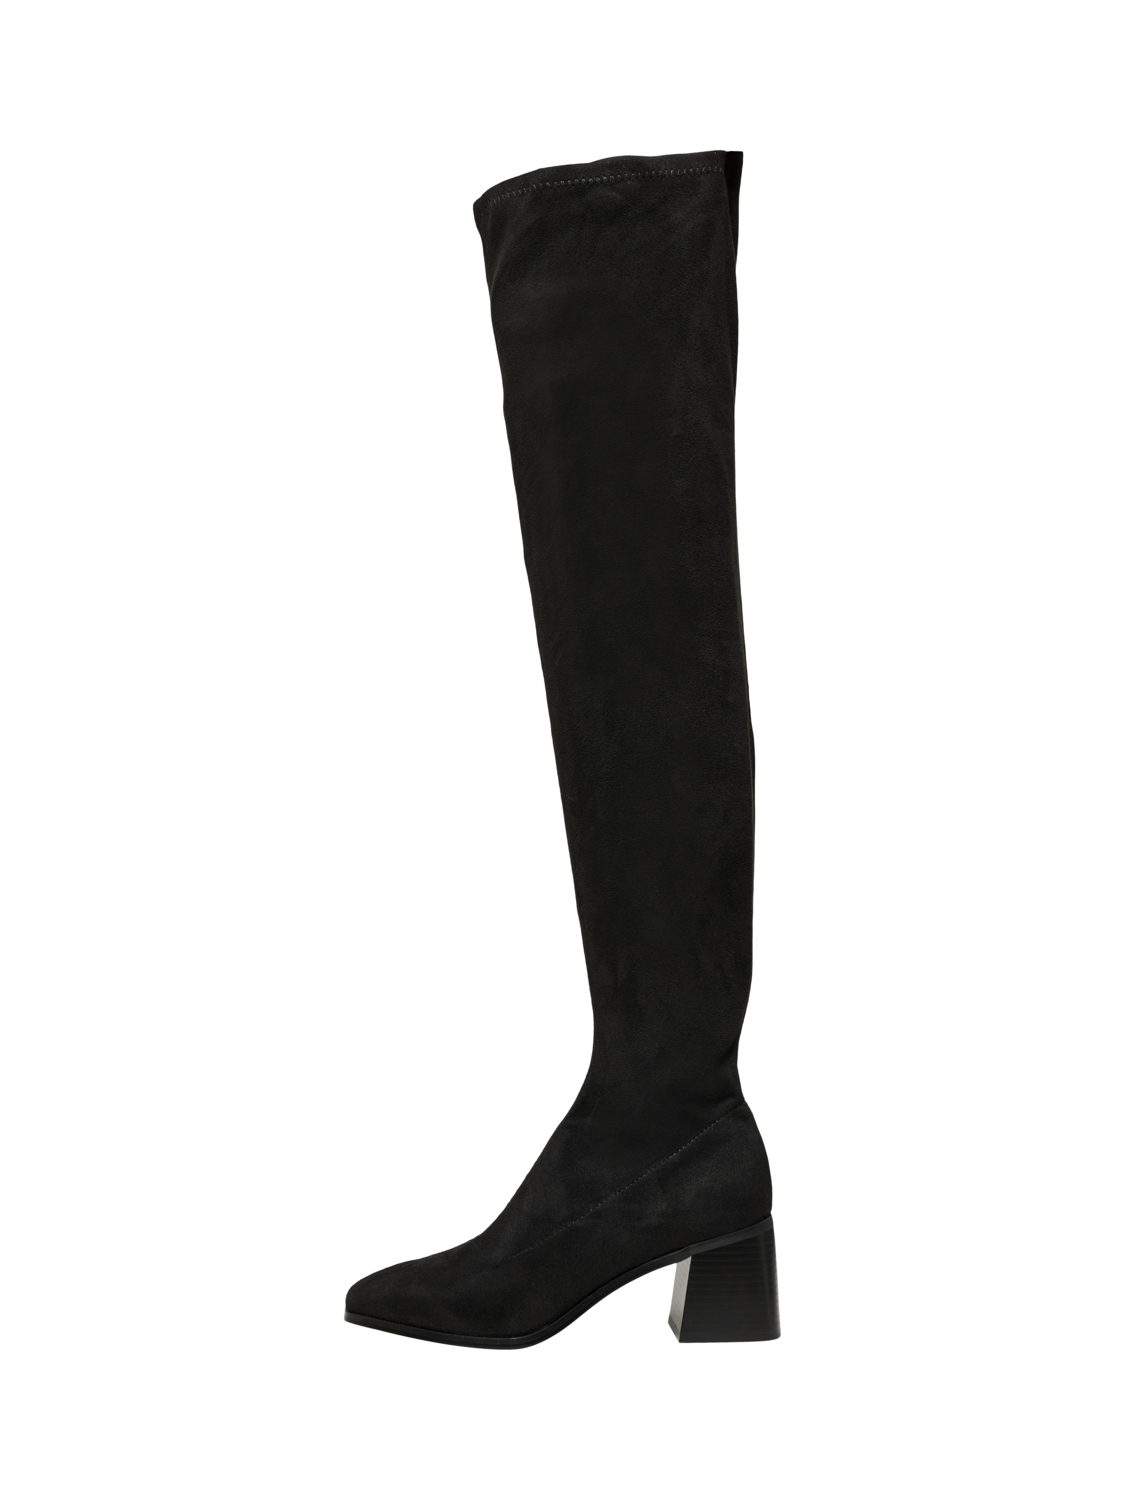 Bijou knee-high boots, BLACK, large